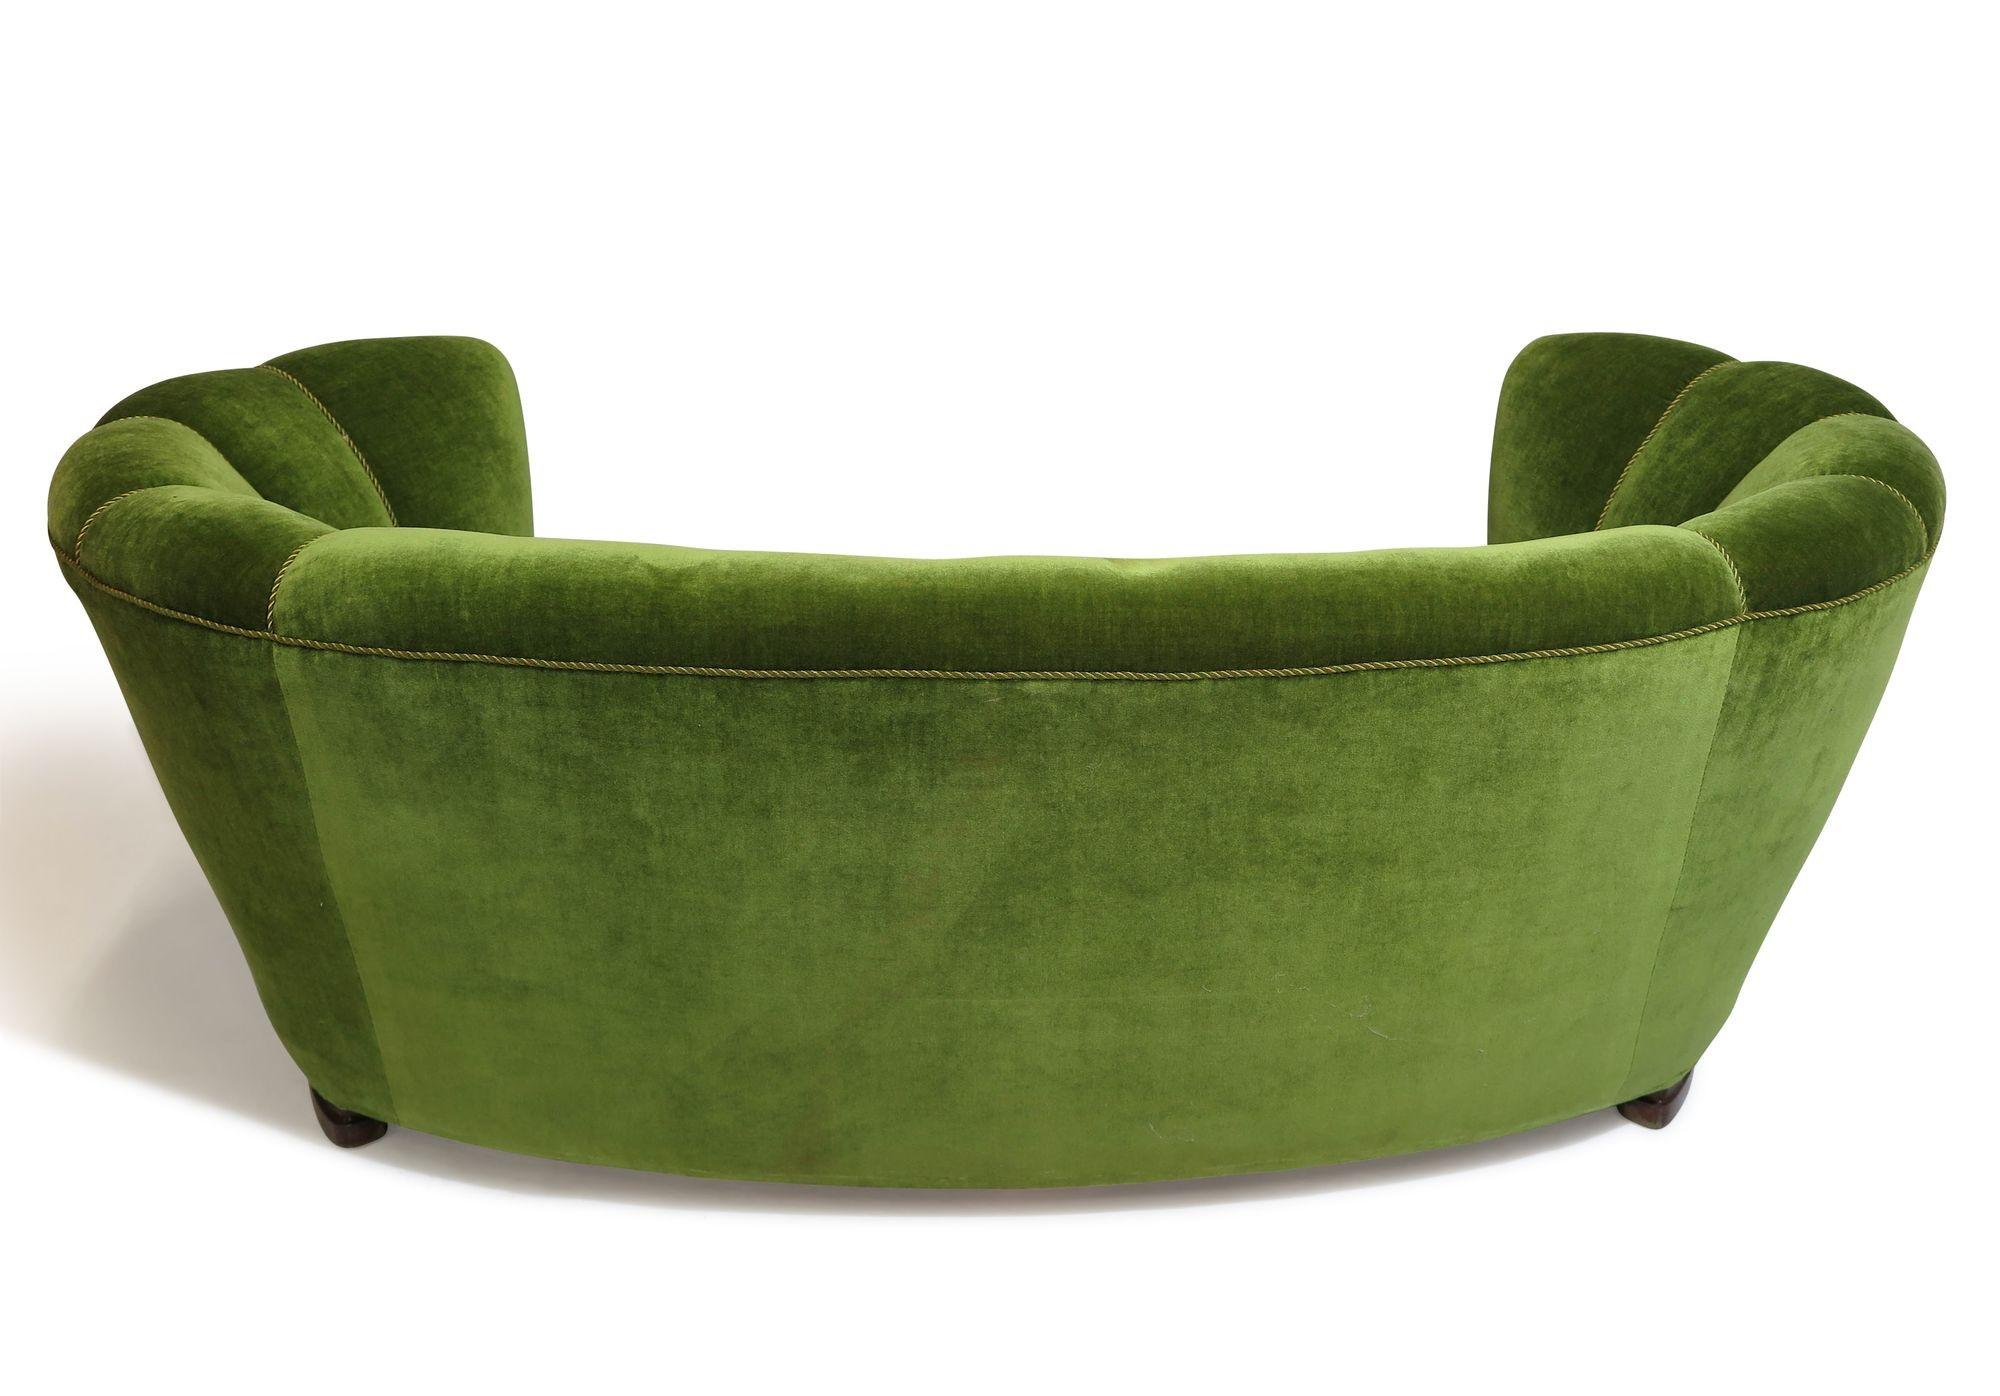 1930's Danish Deco Sofa in Original Green Mohair For Sale 2